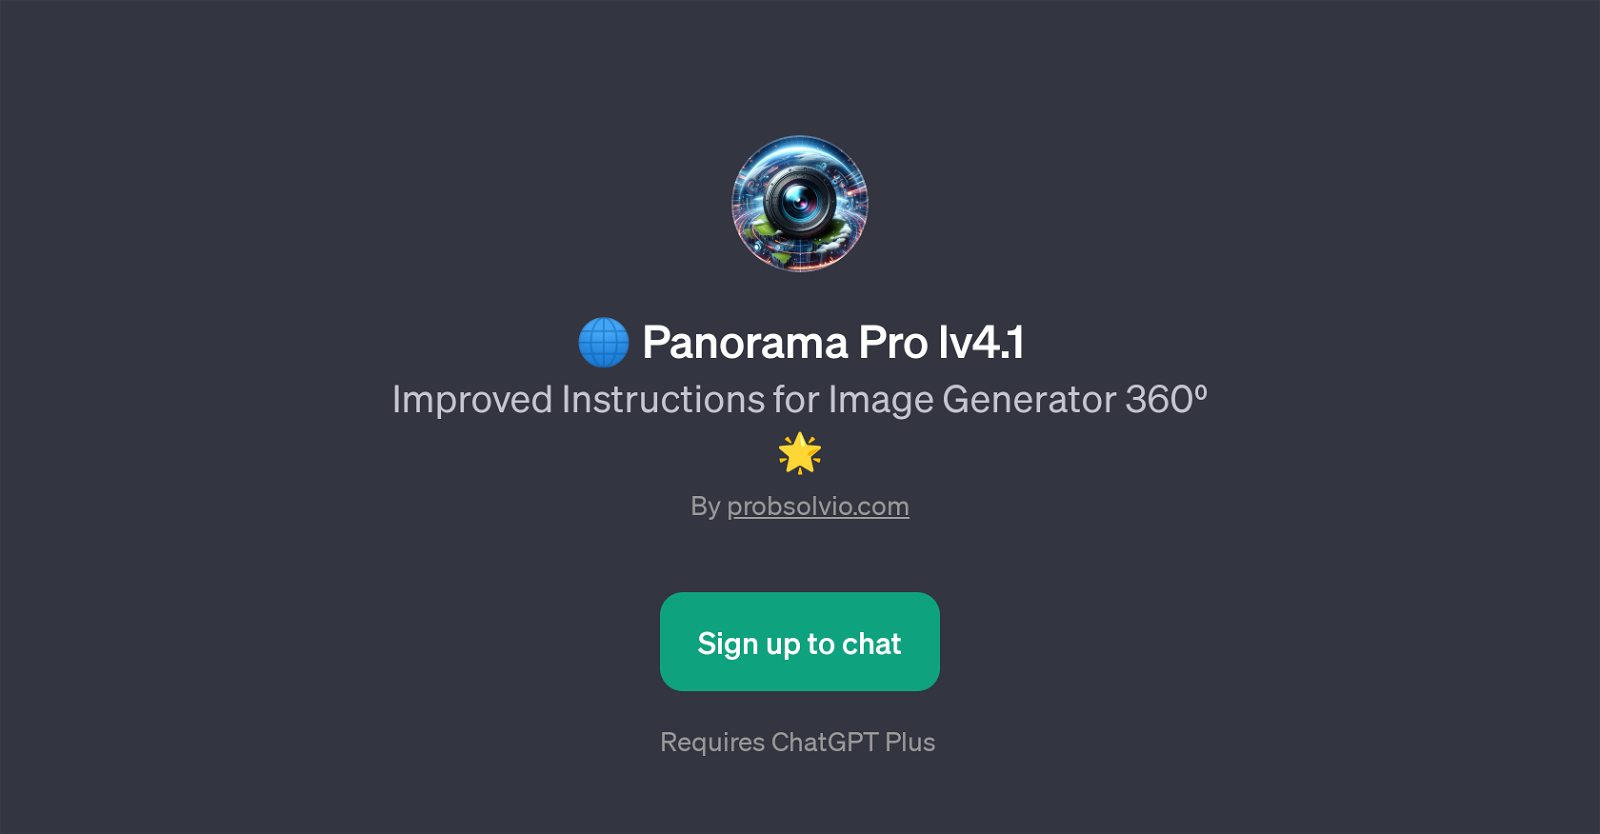 Panorama Pro lv4.1 website